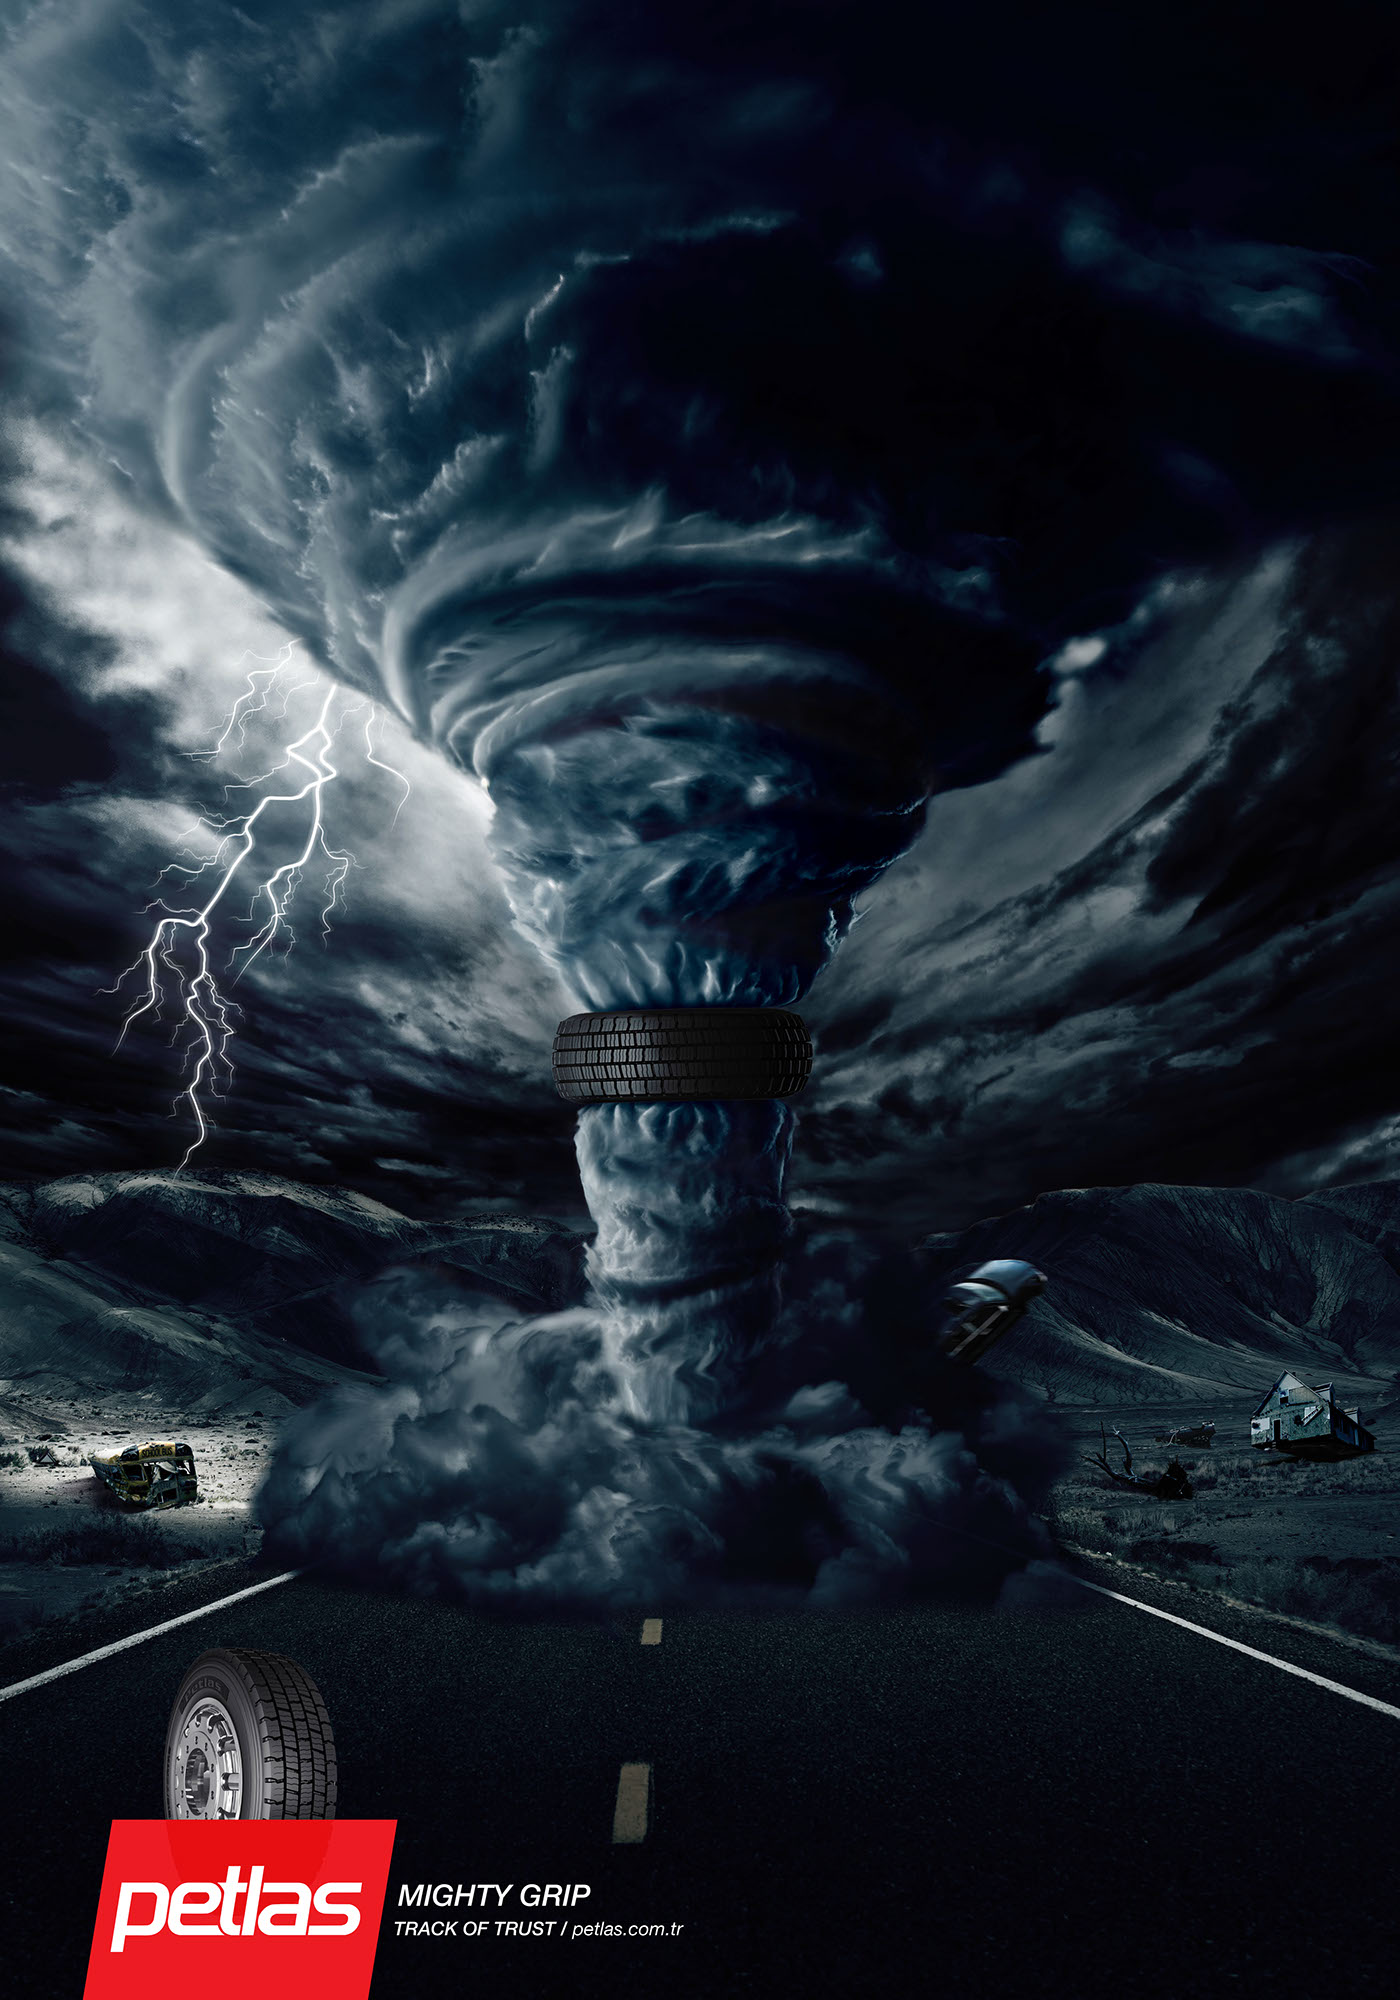 Photo Manipulation  manipulation creative ads photo ArtDirection advertesing printads petlas Tree  tornado storm Tire tyre clouds